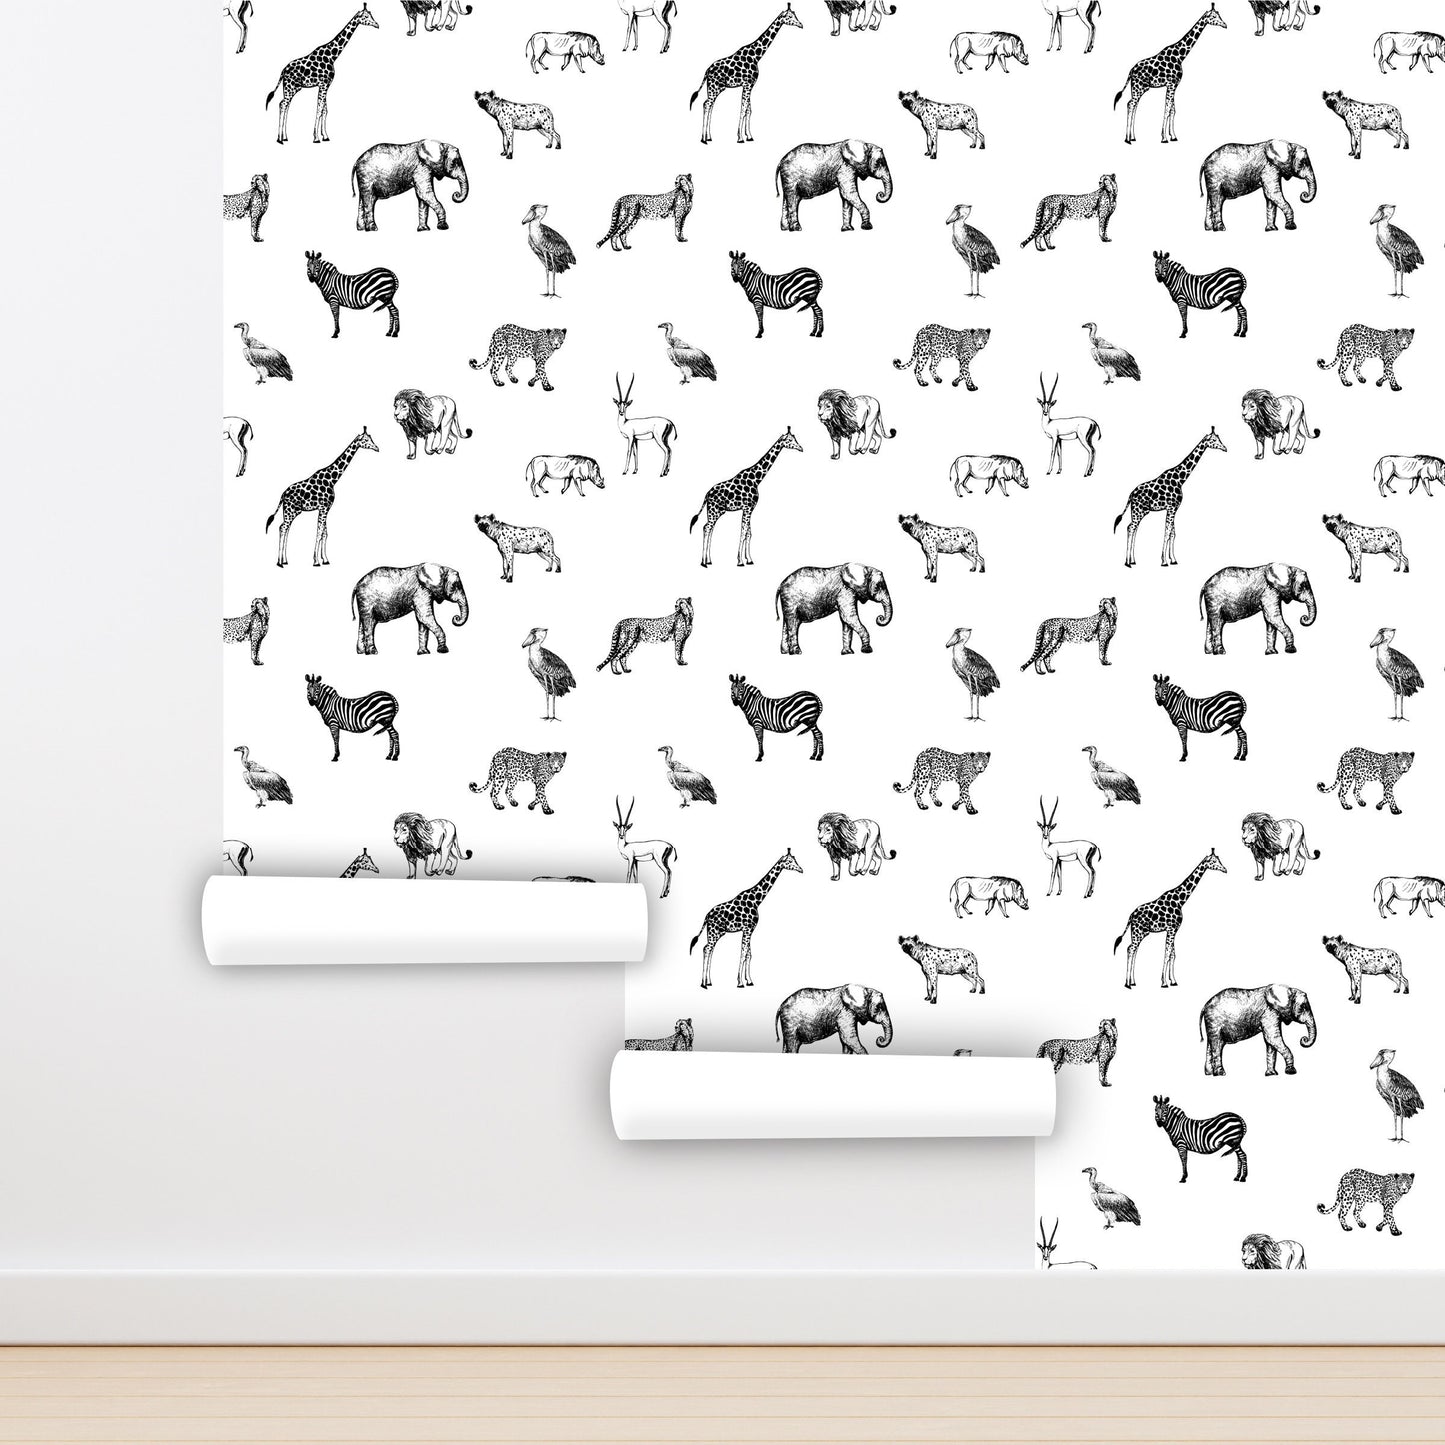 Elephant Wallpaper, Giraffe Wallpaper, Black and White Wallpaper Peel and Stick, Animal Wallpaper, Removable Wall Paper